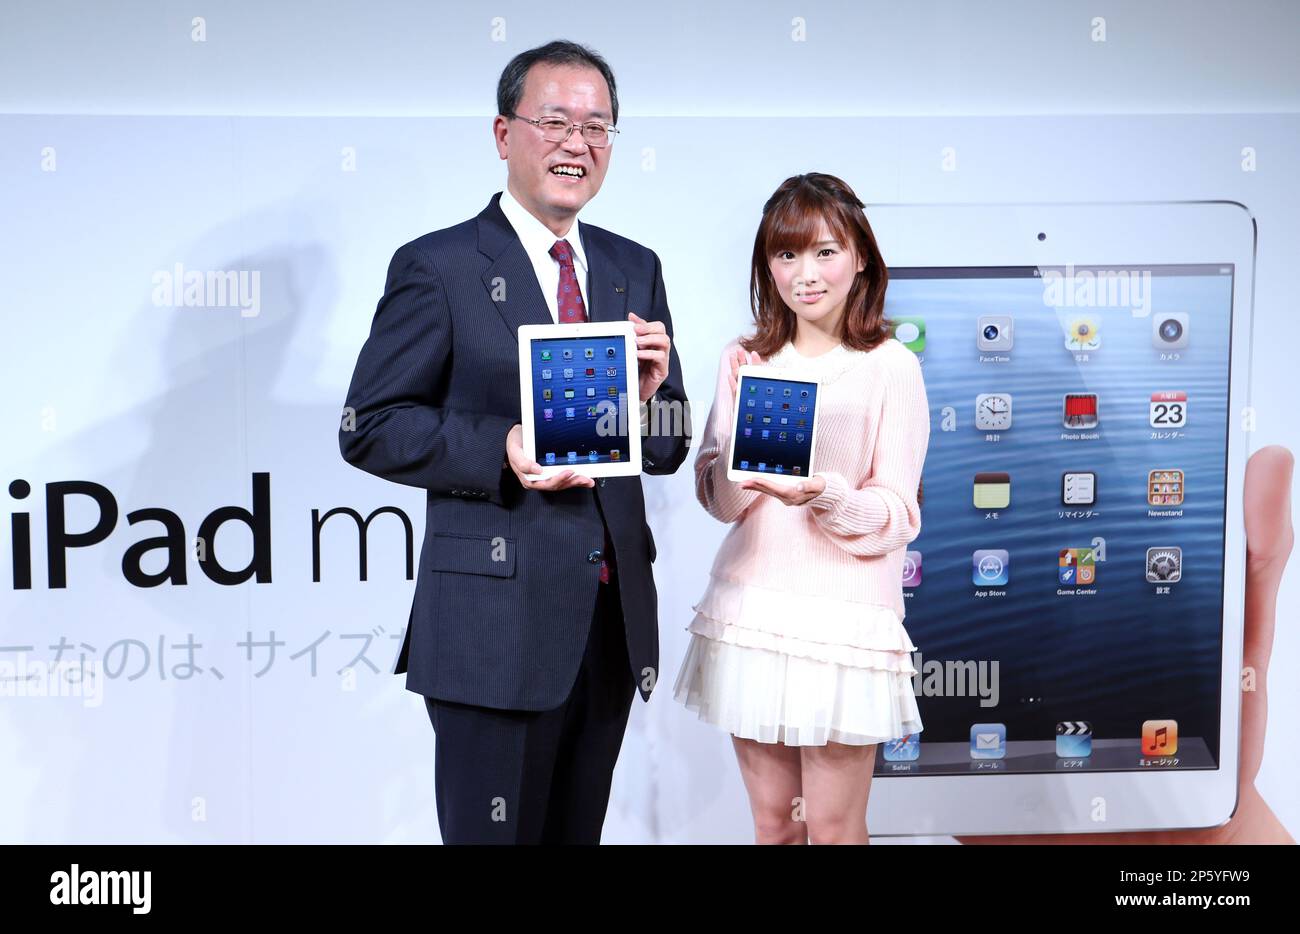 KDDI's president Takashi Tanaka L with a new iPad 4 and